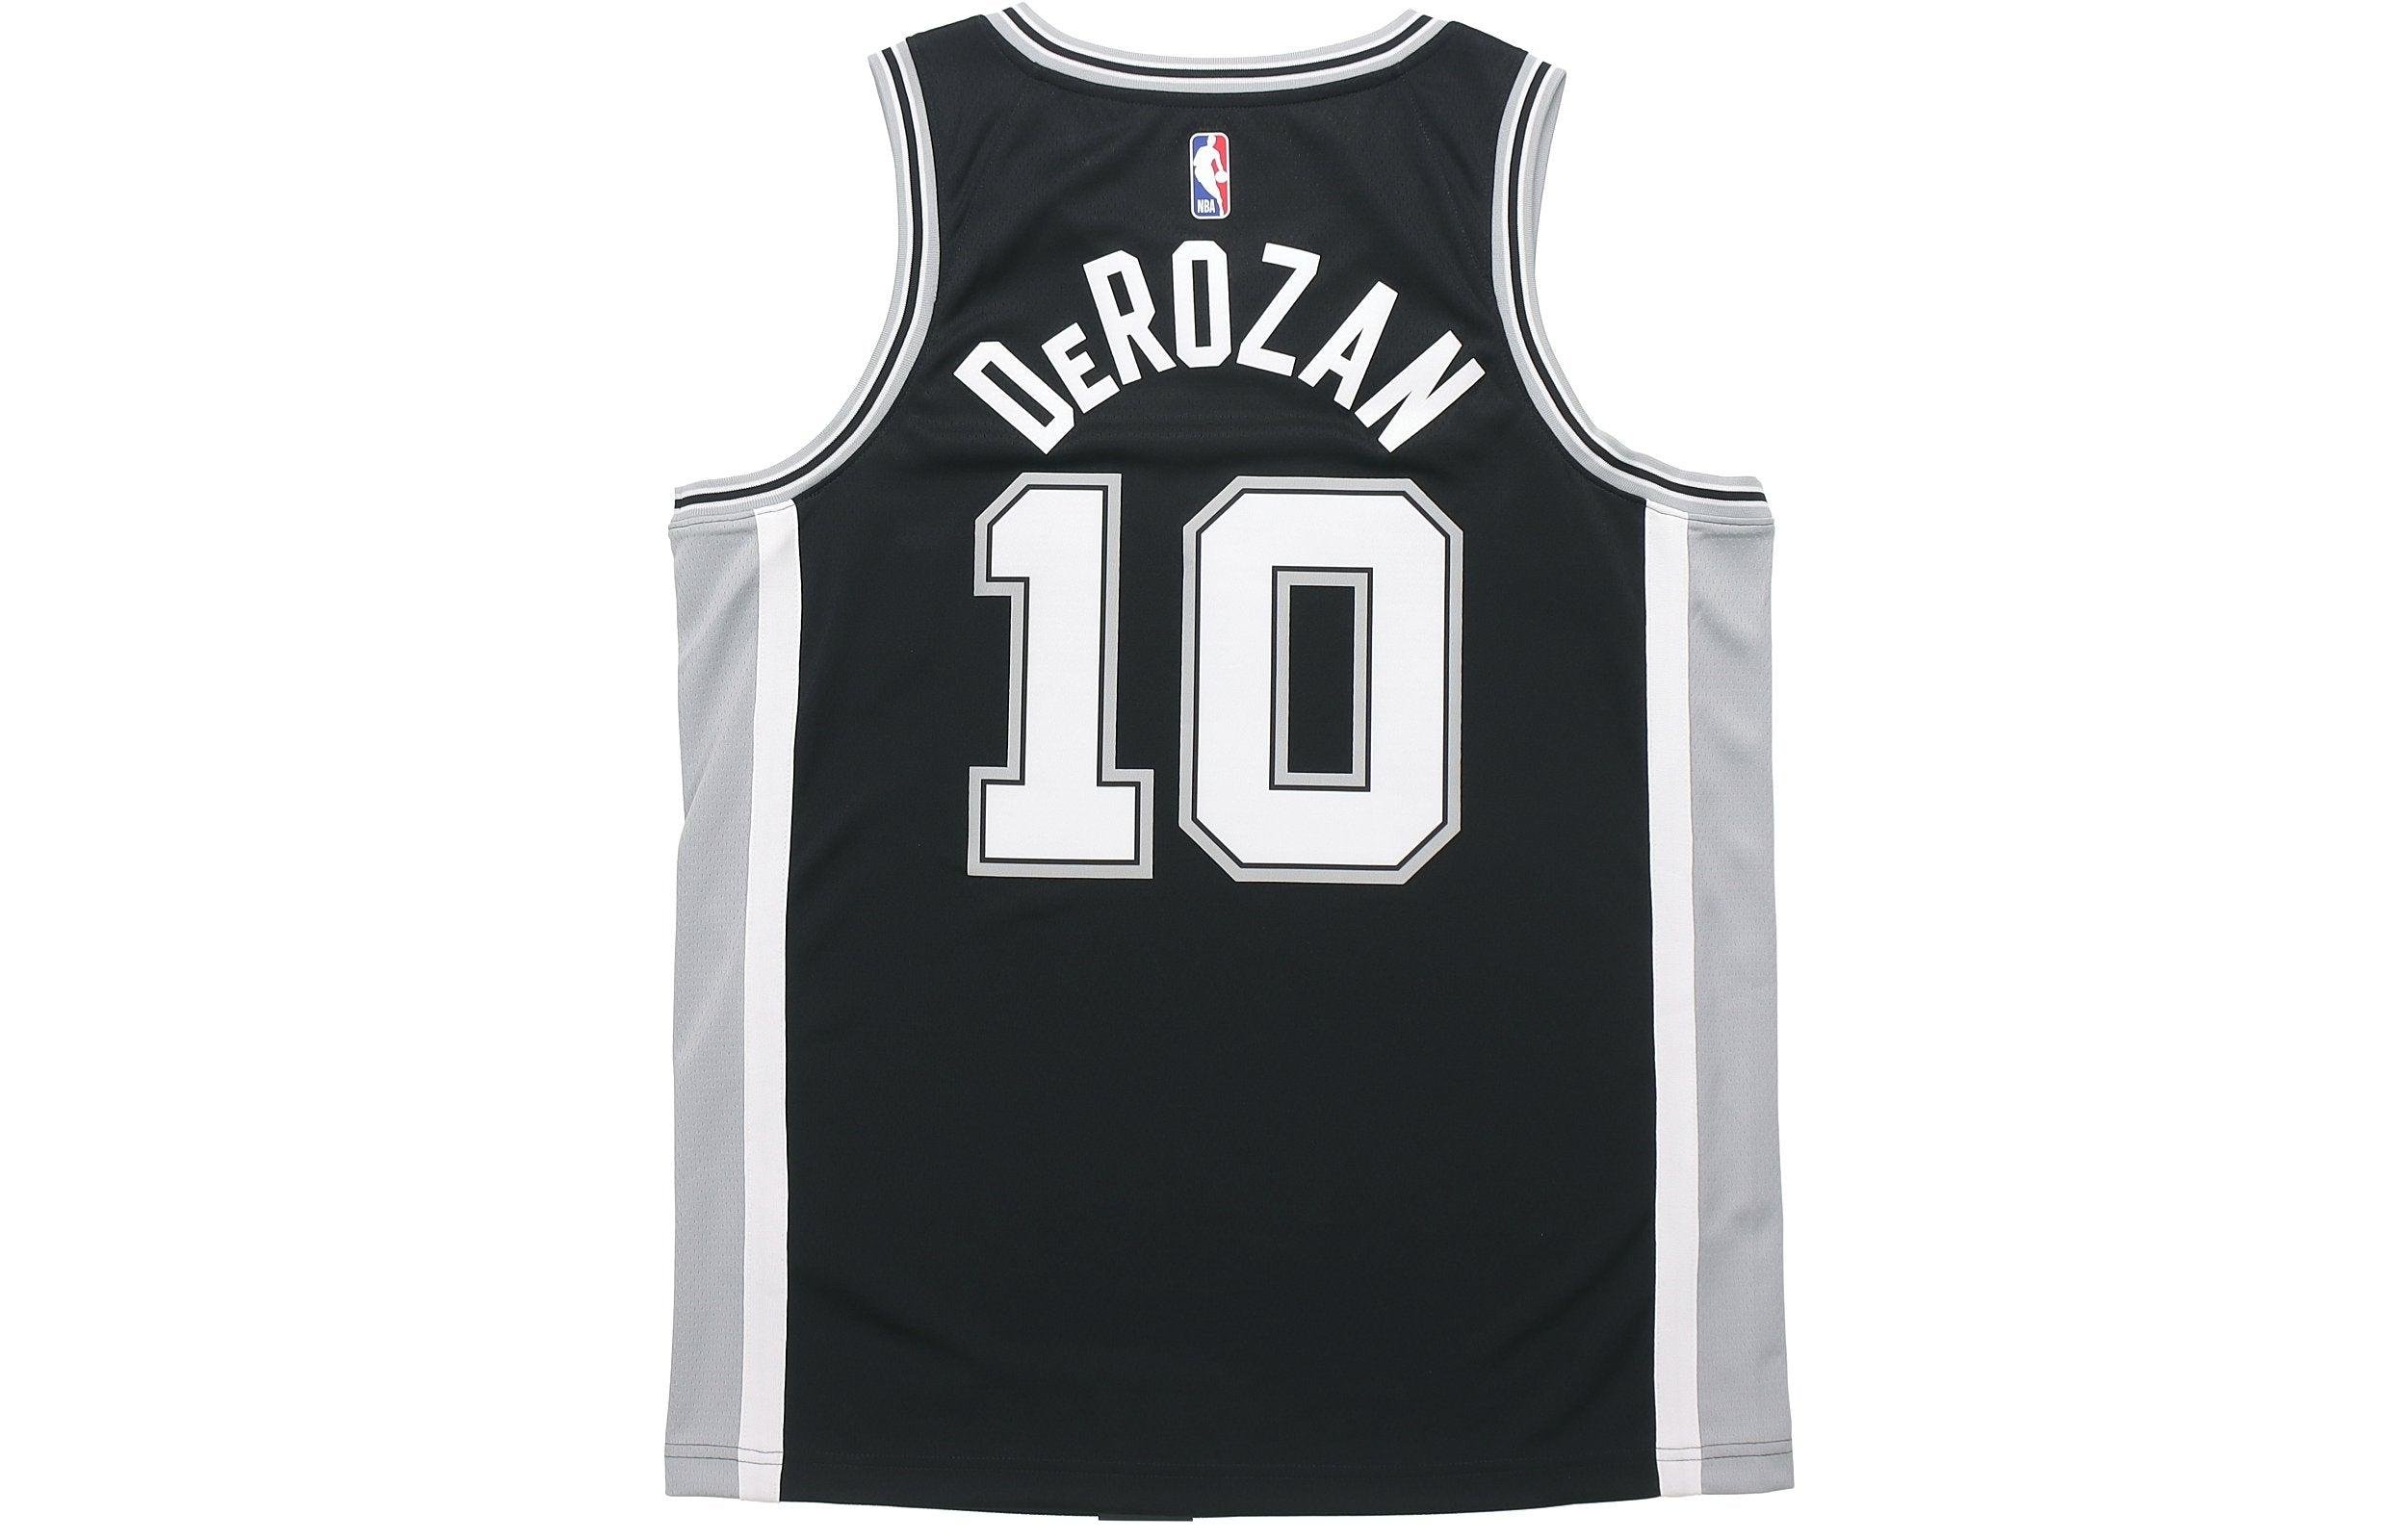 Jordan Brand Brooklyn Nets Statement Jersey Kyrie Irving $110